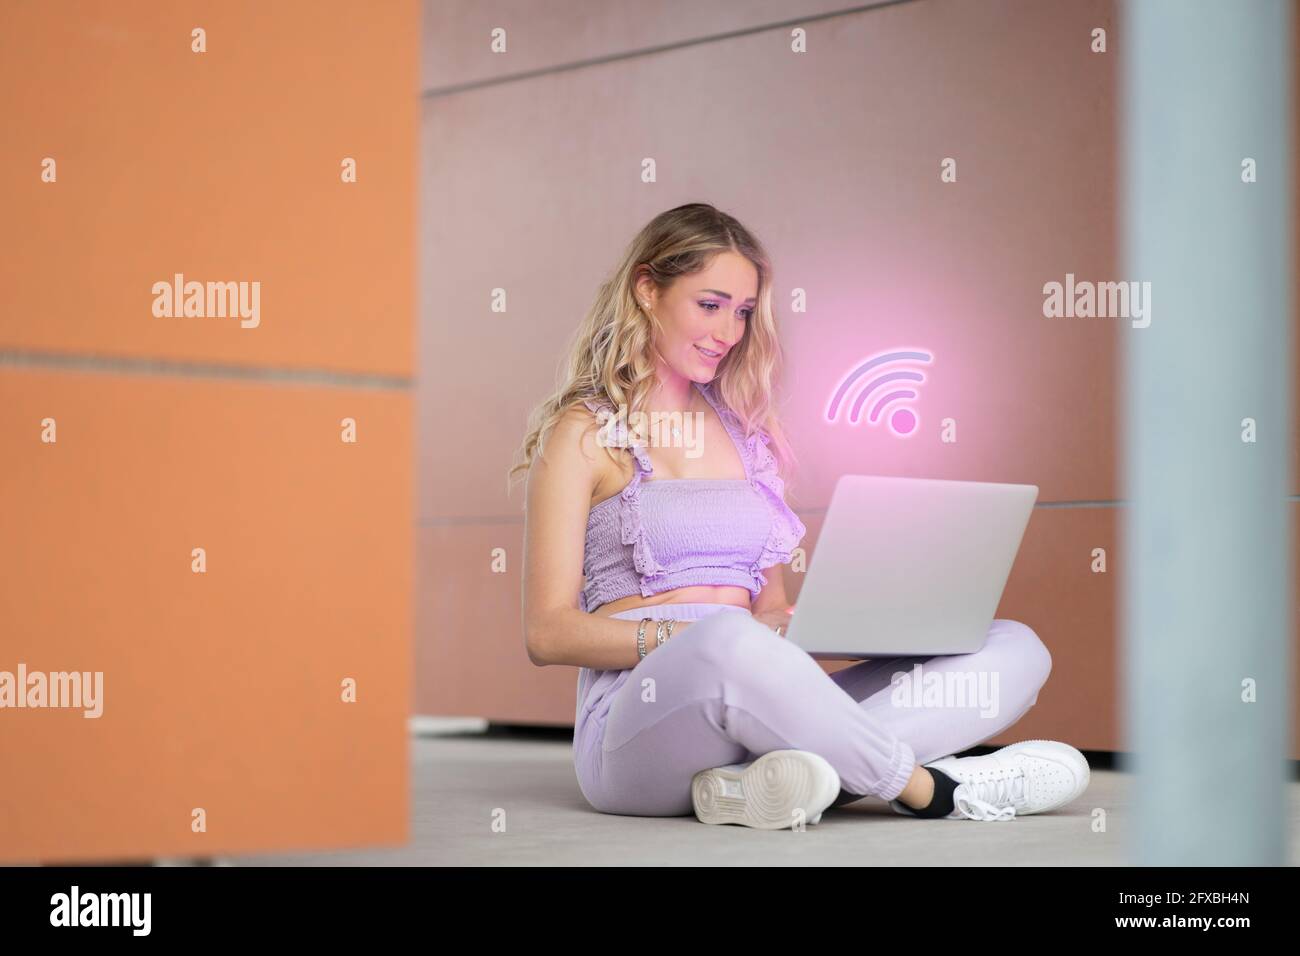 Beautiful woman using laptop with digitally generated WIFI logo Stock Photo